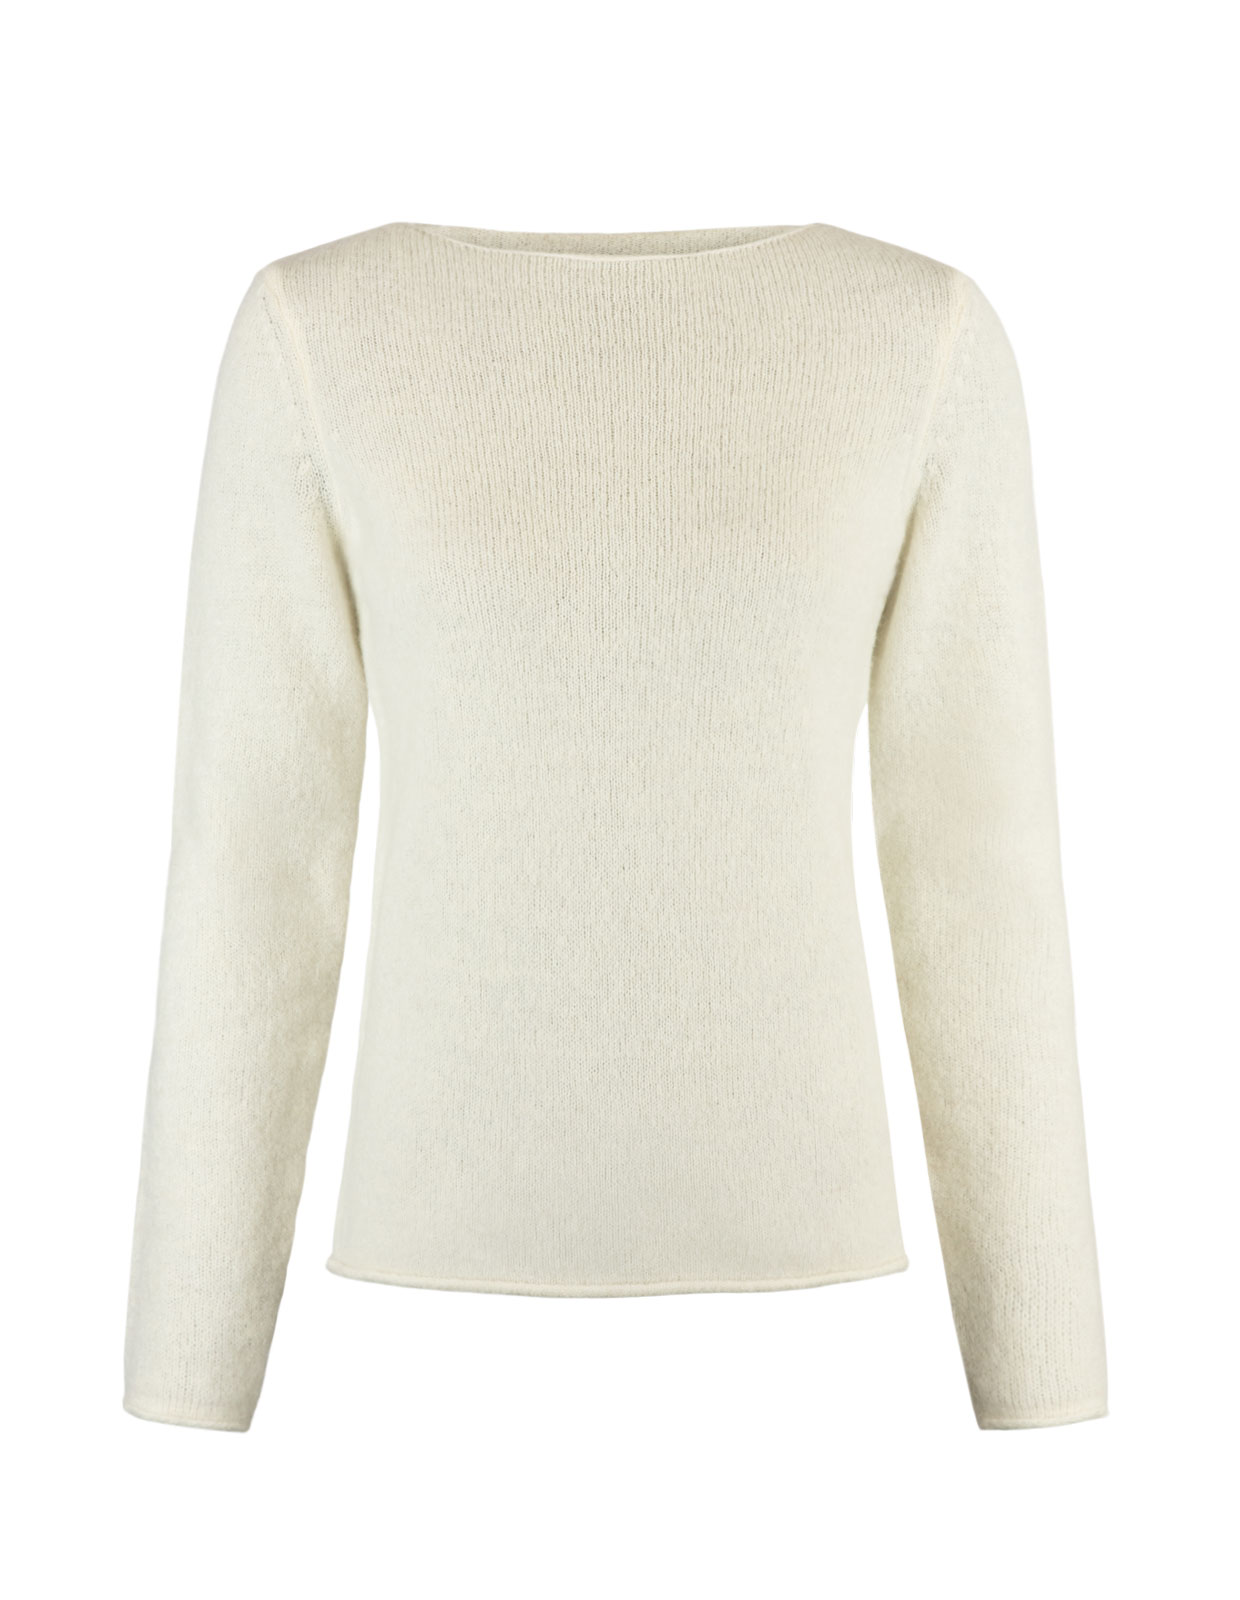 Ferisa Sweater Open White